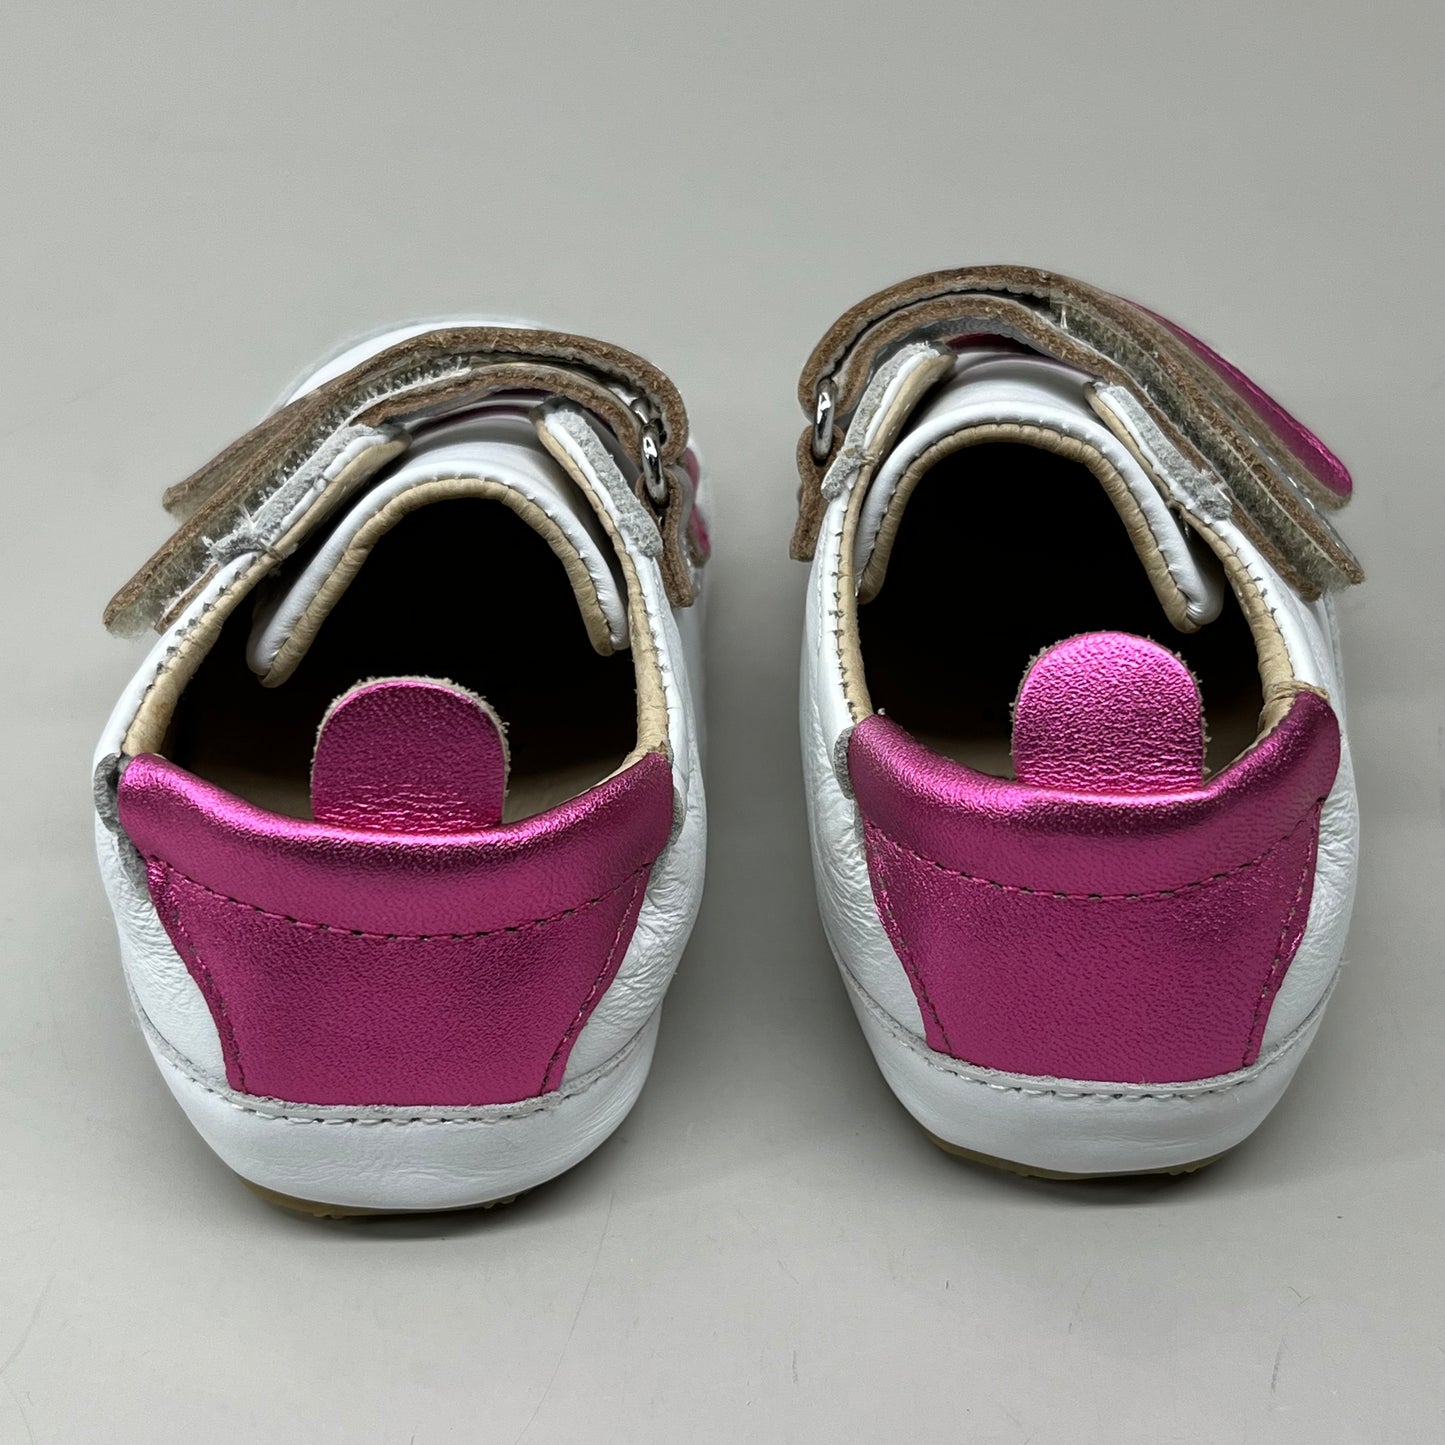 OLD SOLES Baby 2 Straps Leather Shoe Sz 4 EU 20 Snow/Fuchsia Foil/Silver #0060R